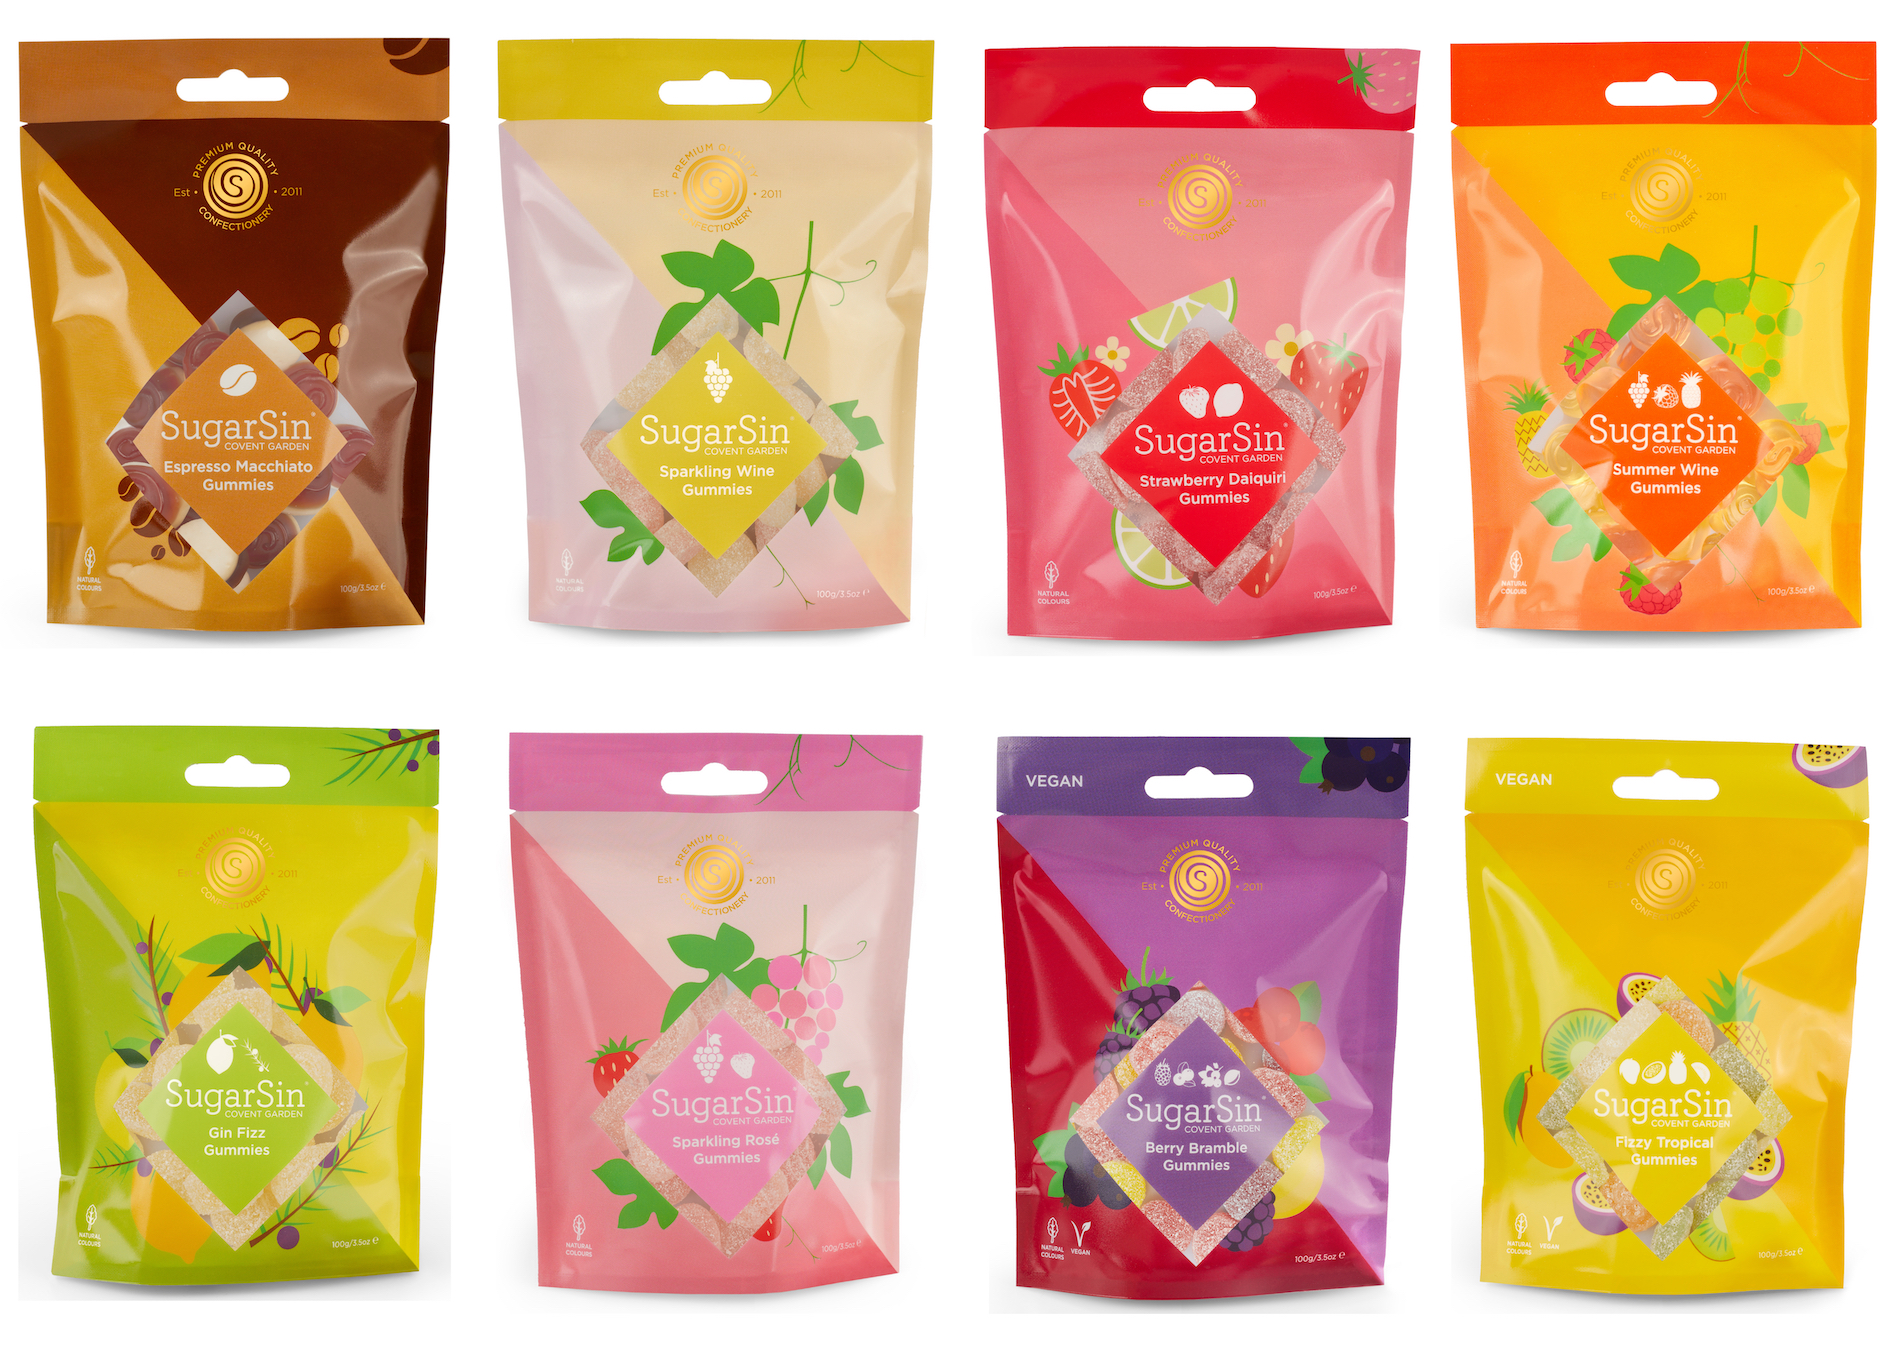 SugarSin launches new gourmet range of gummies